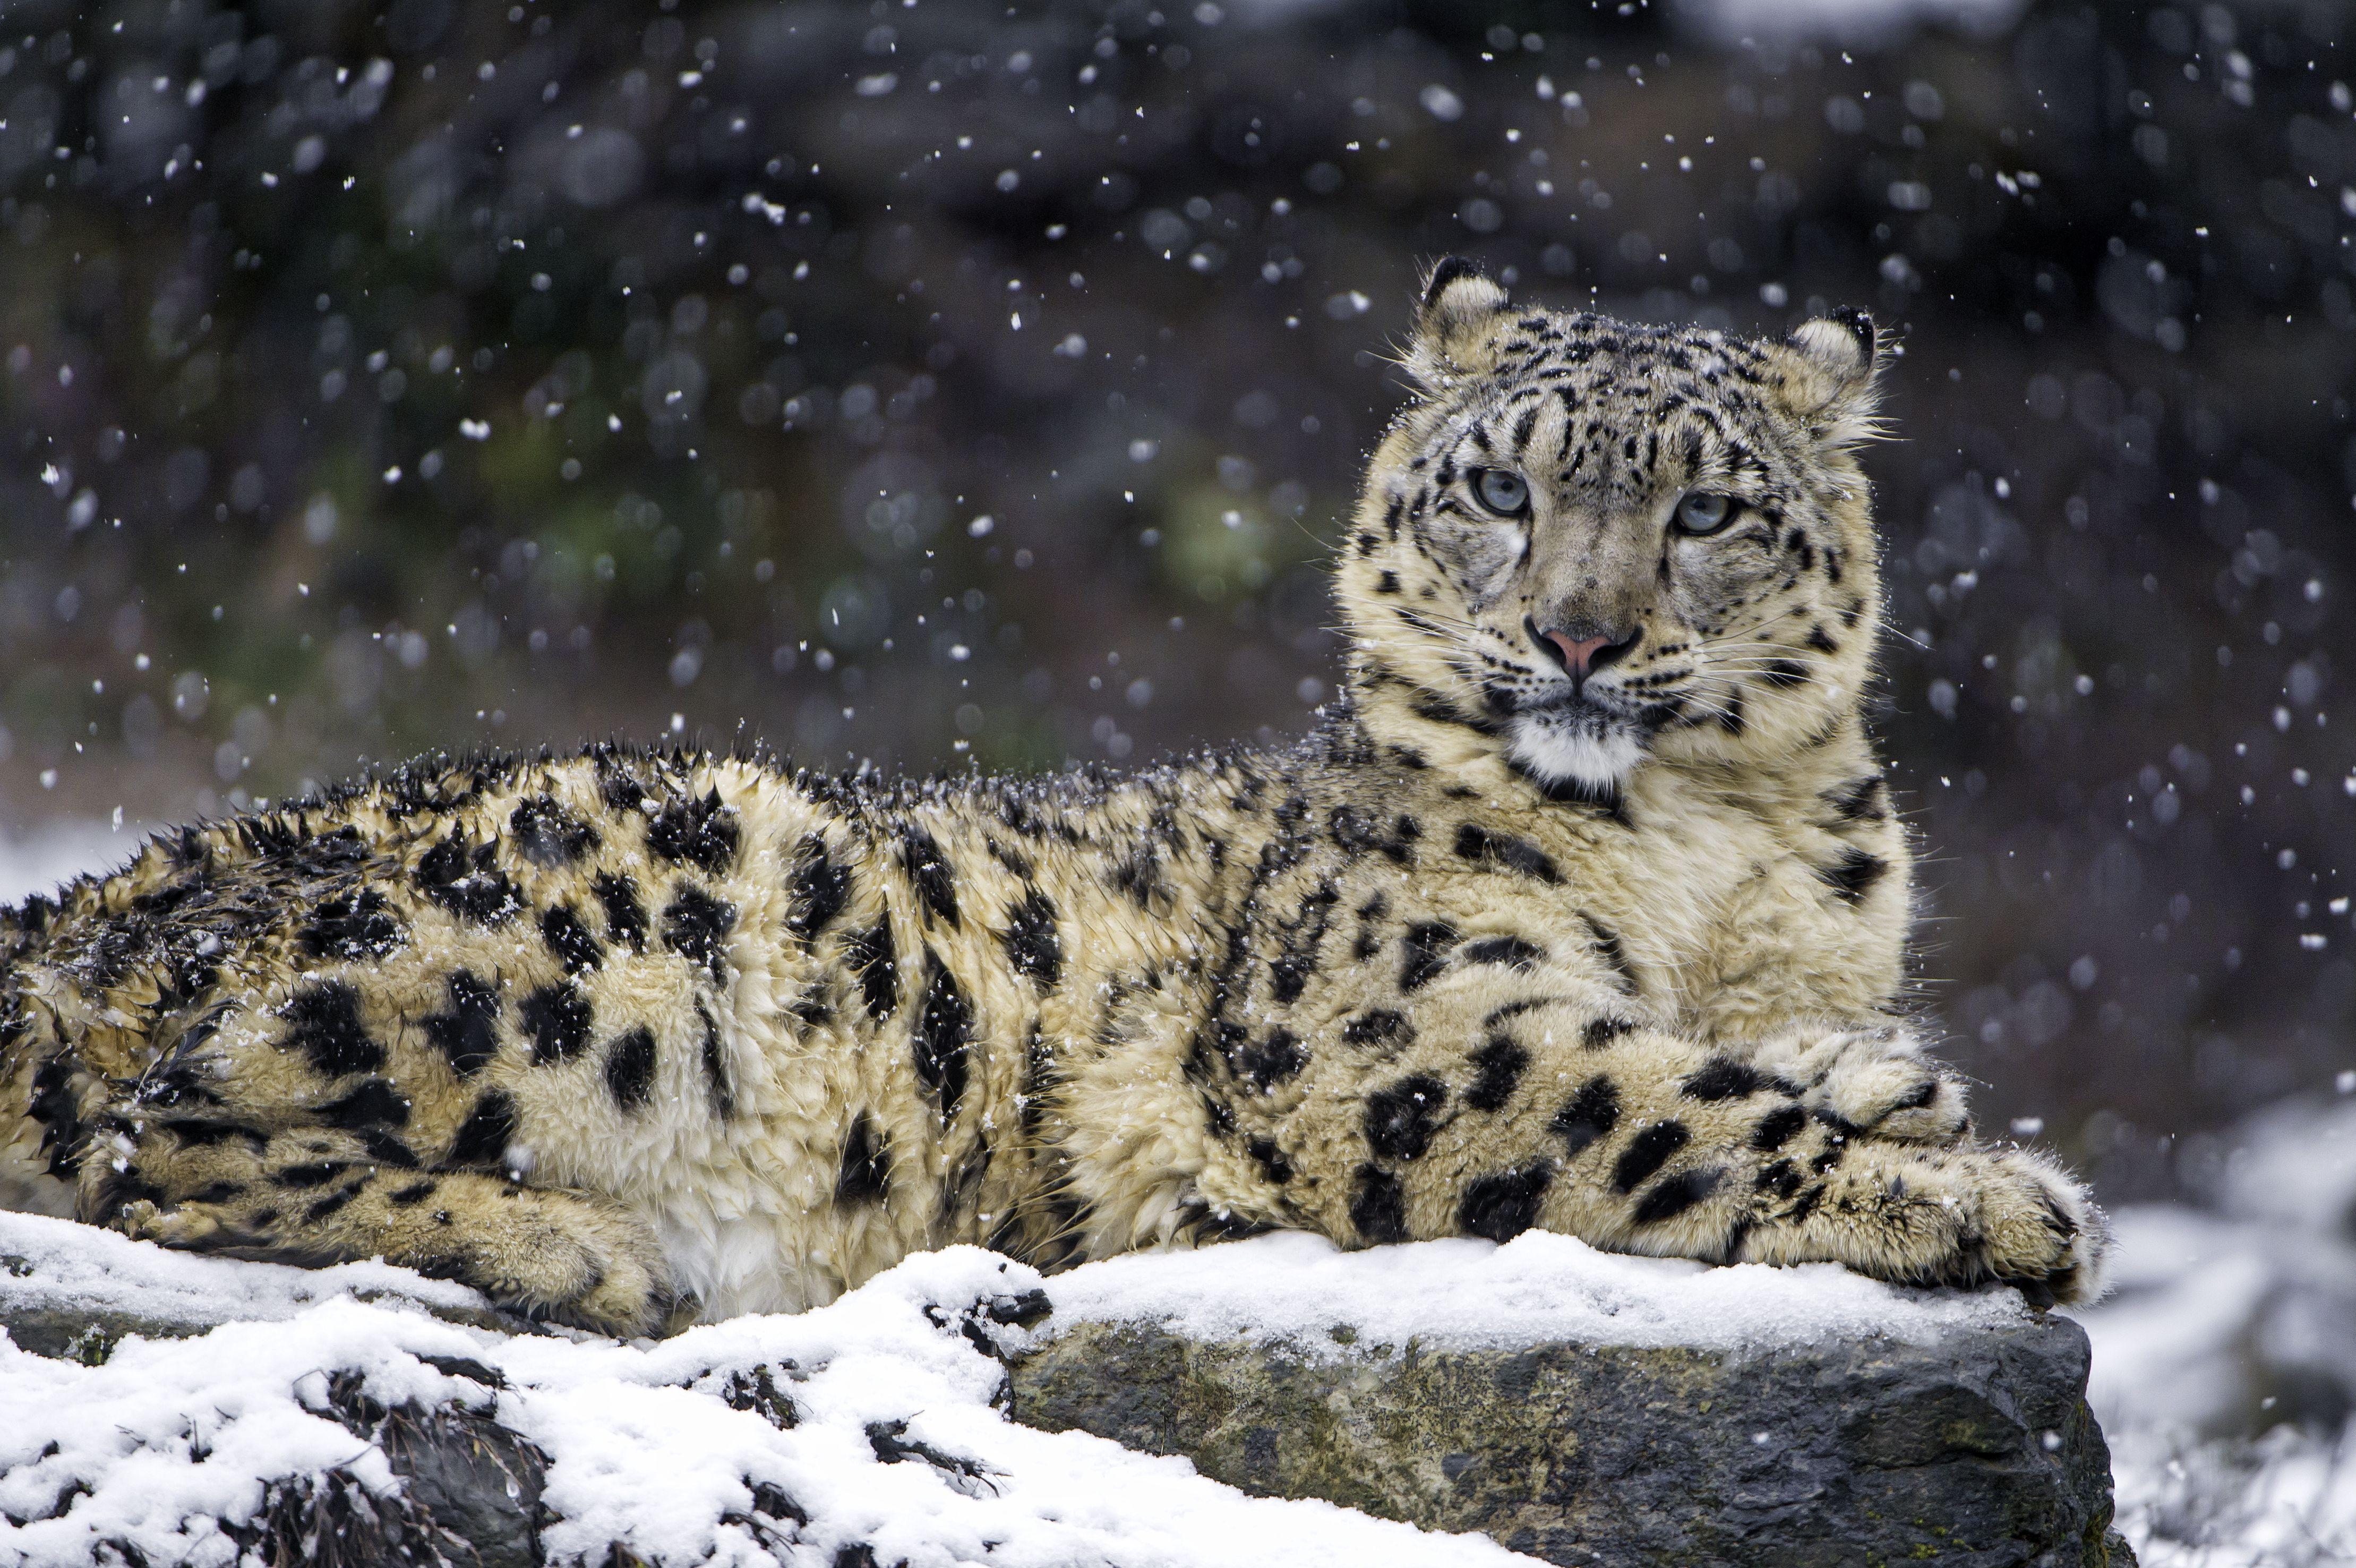 Snow Leopard wallpaper - Animal wallpapers - #10803